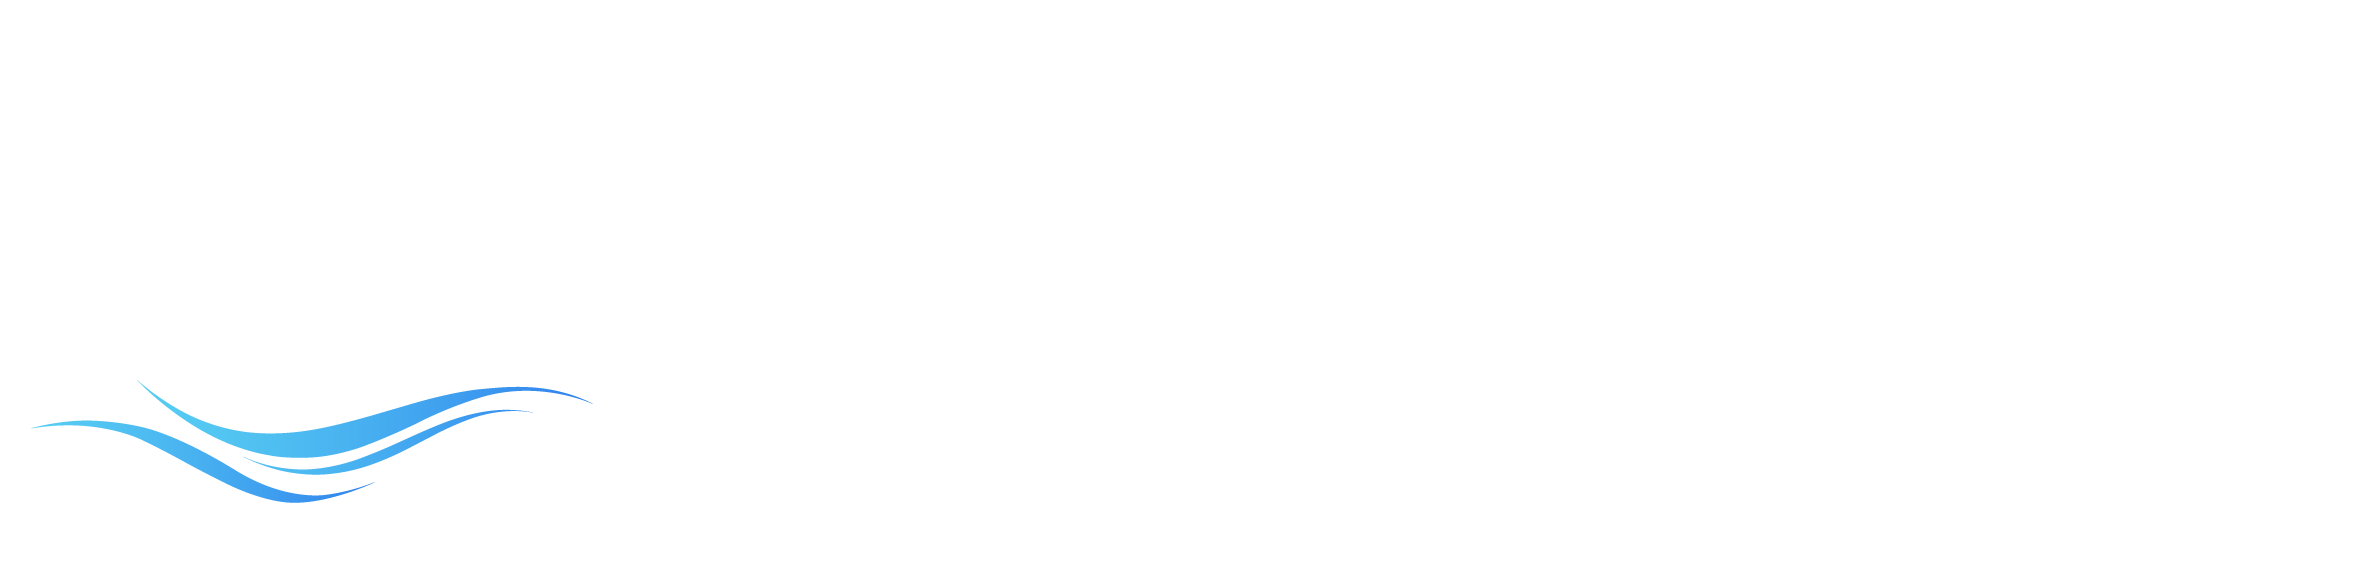 Maddox Custom Pools & Landscaping